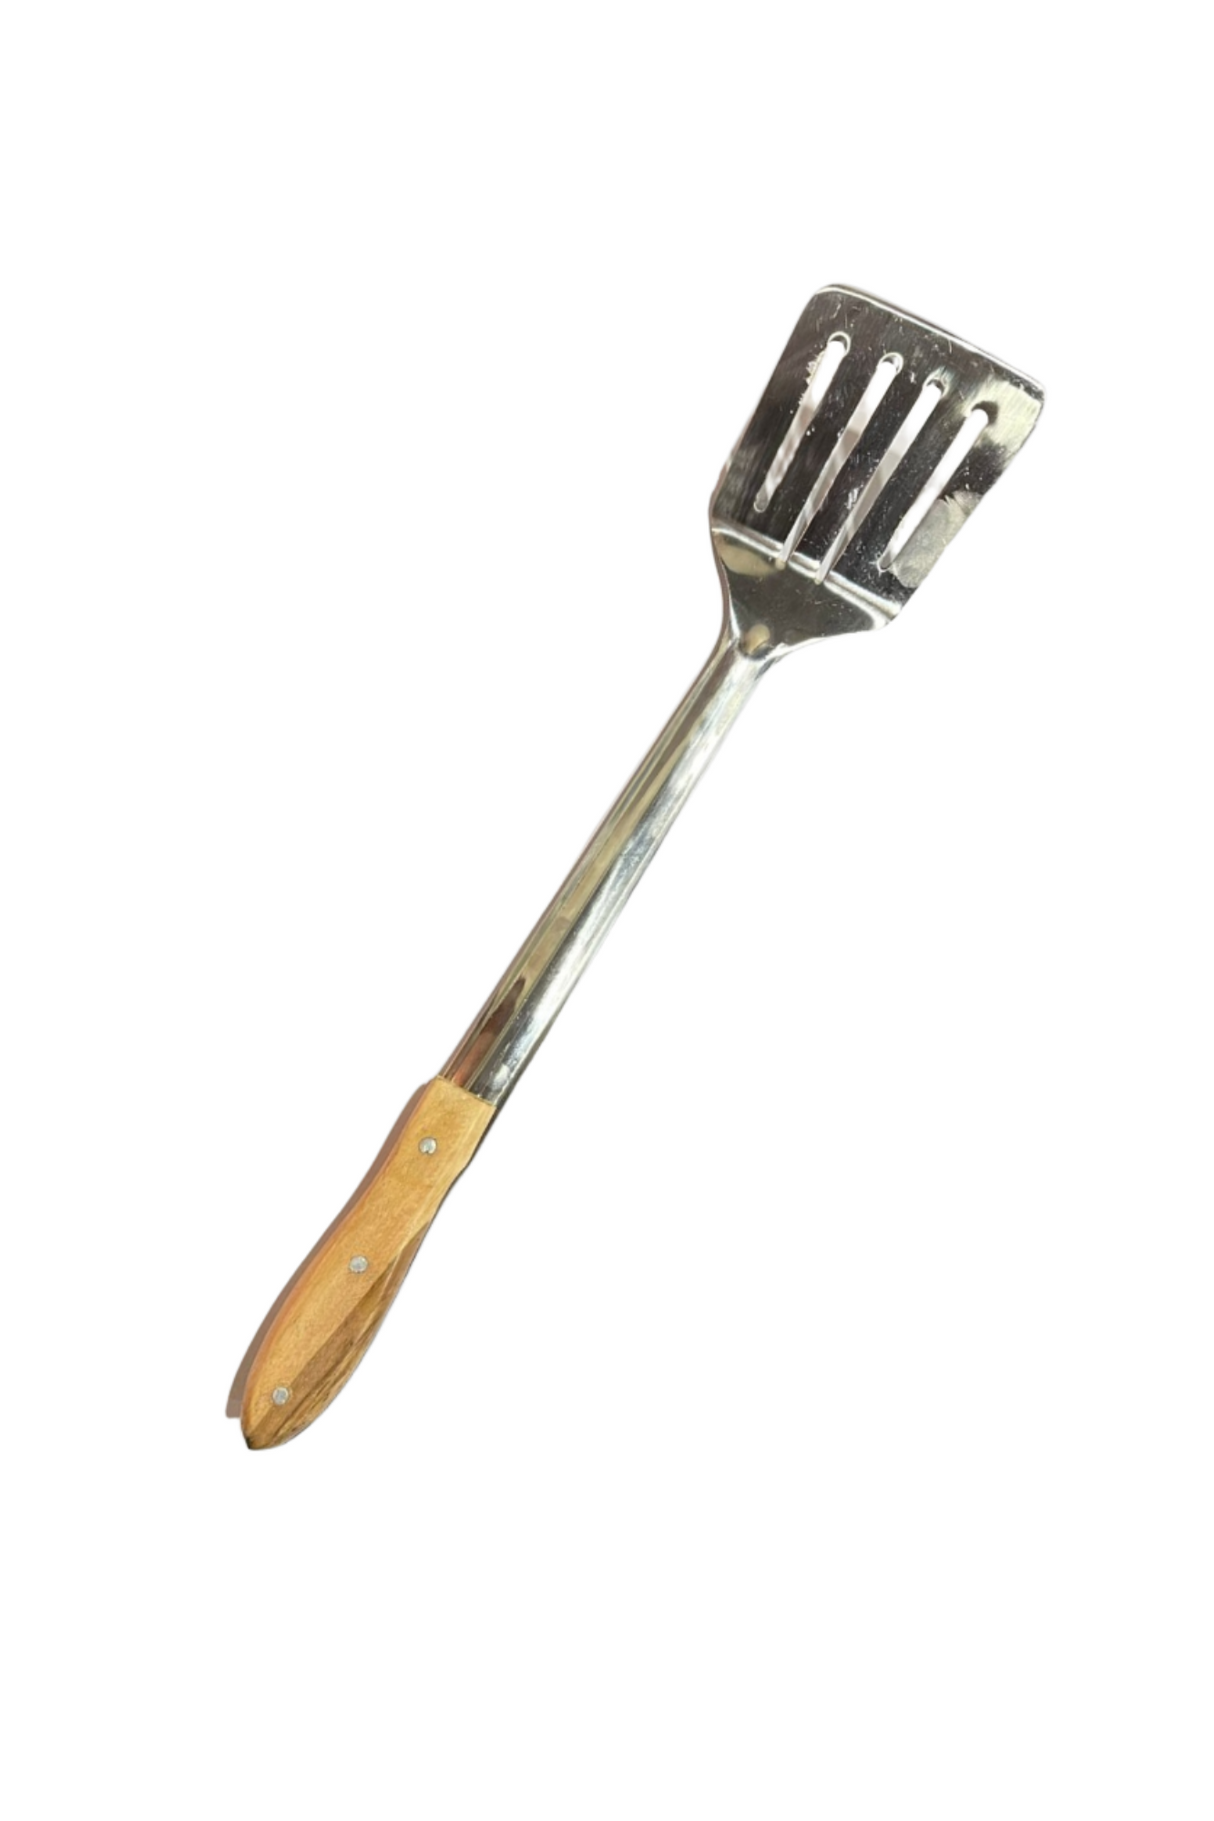 ss spatula wood handle 16''